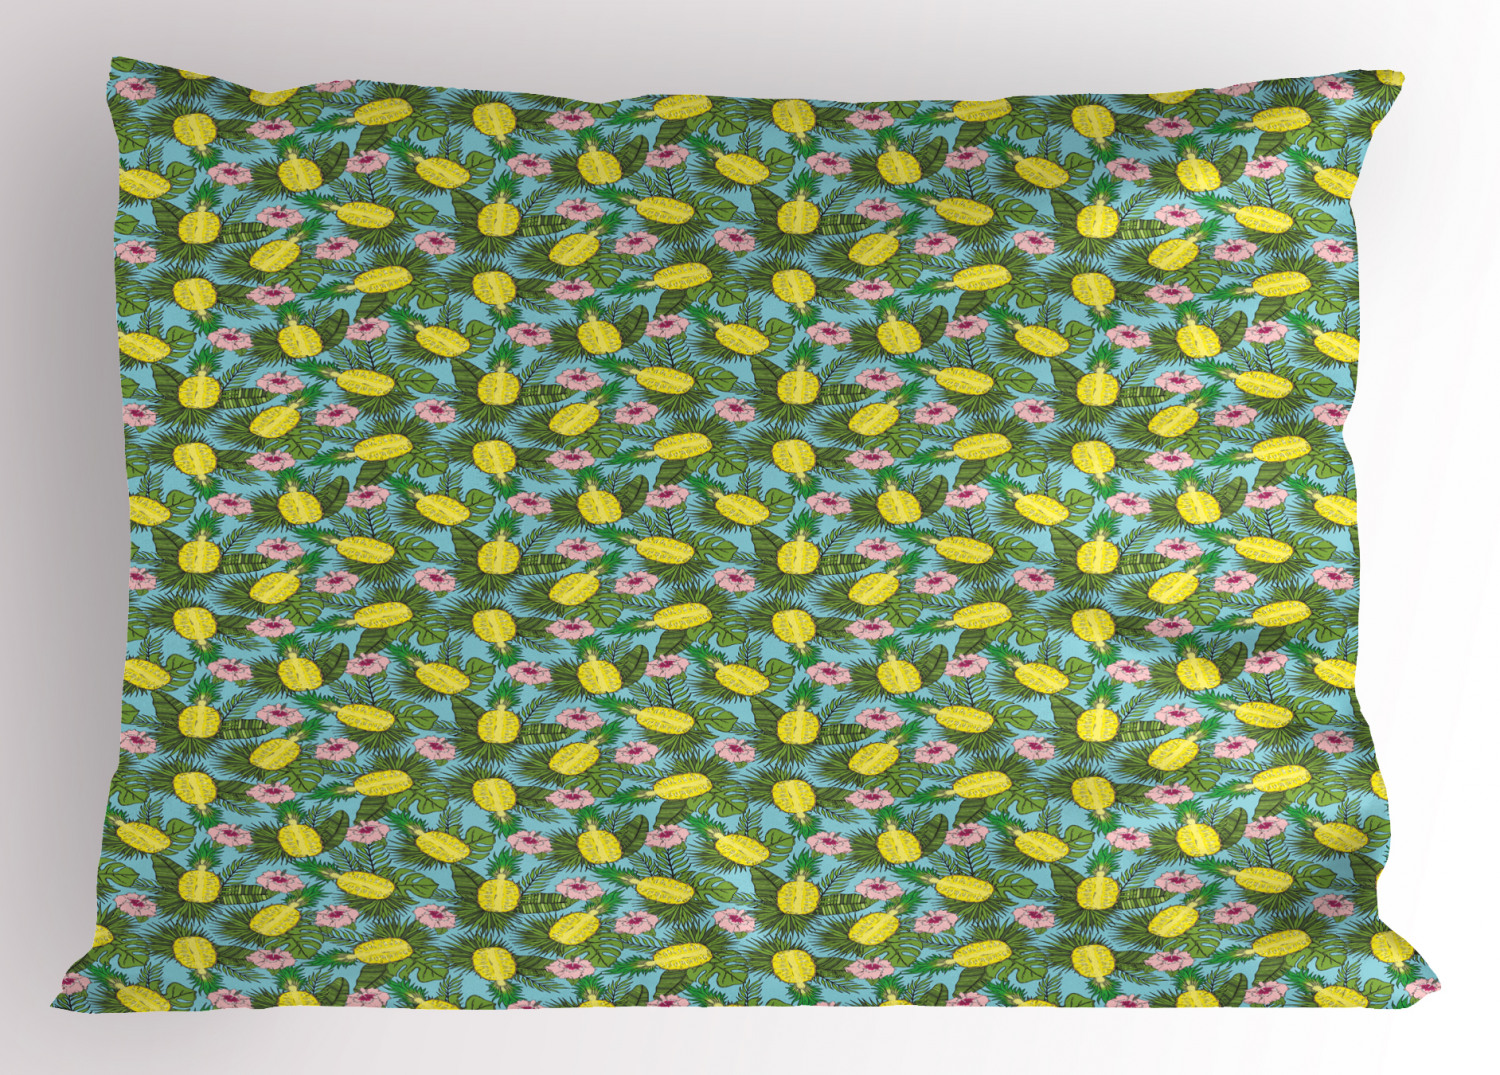 Details about   Colorful Tropical Pillow Sham Decorative Pillowcase 3 Sizes for Bedroom Decor 